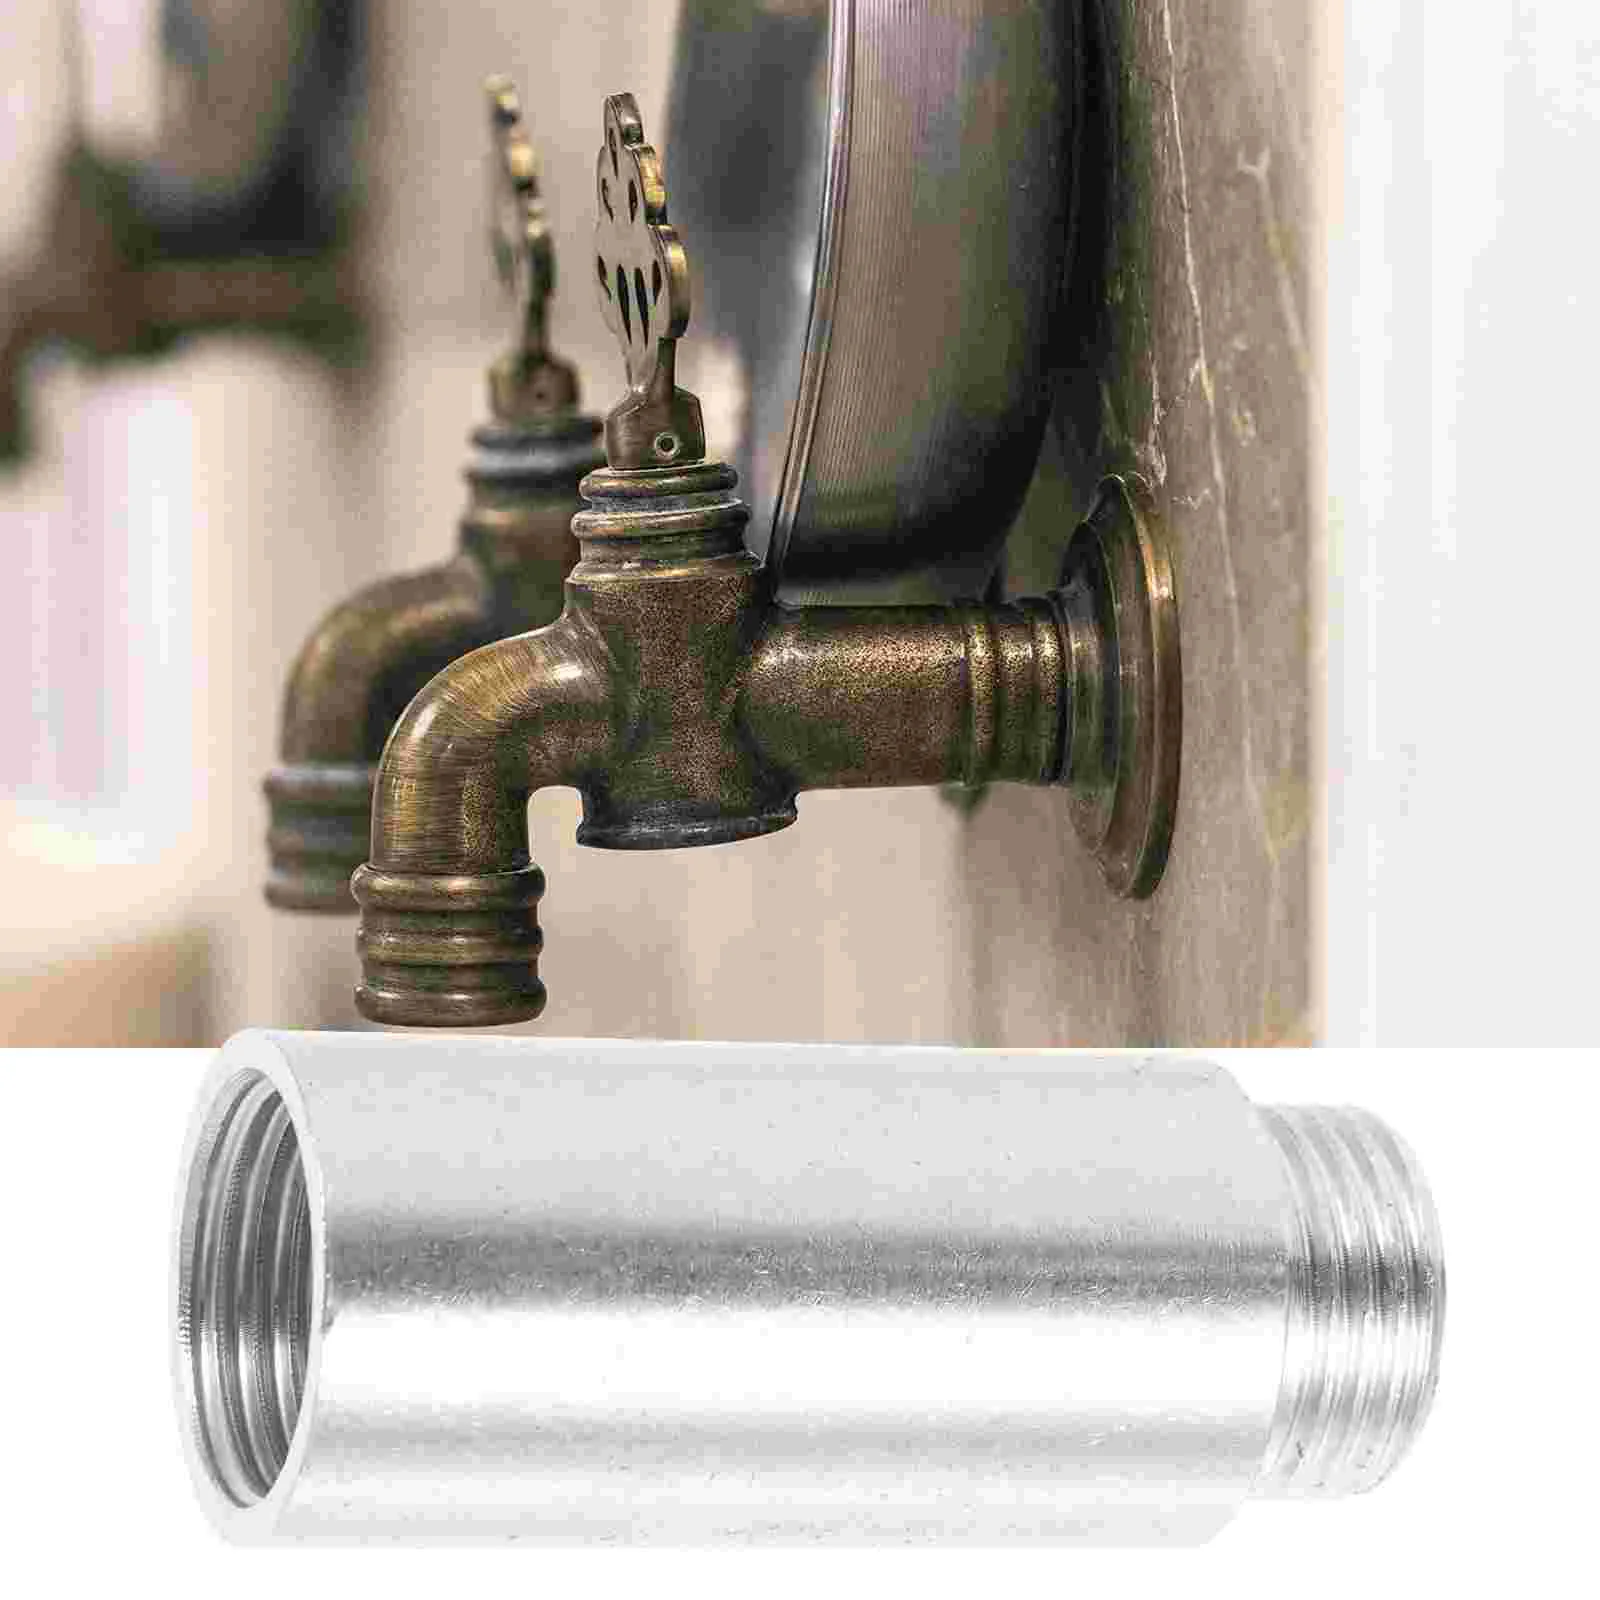 

Stainless Steel Shower Heads Extender Bathroom Home Metal Extenders Pipe Extension